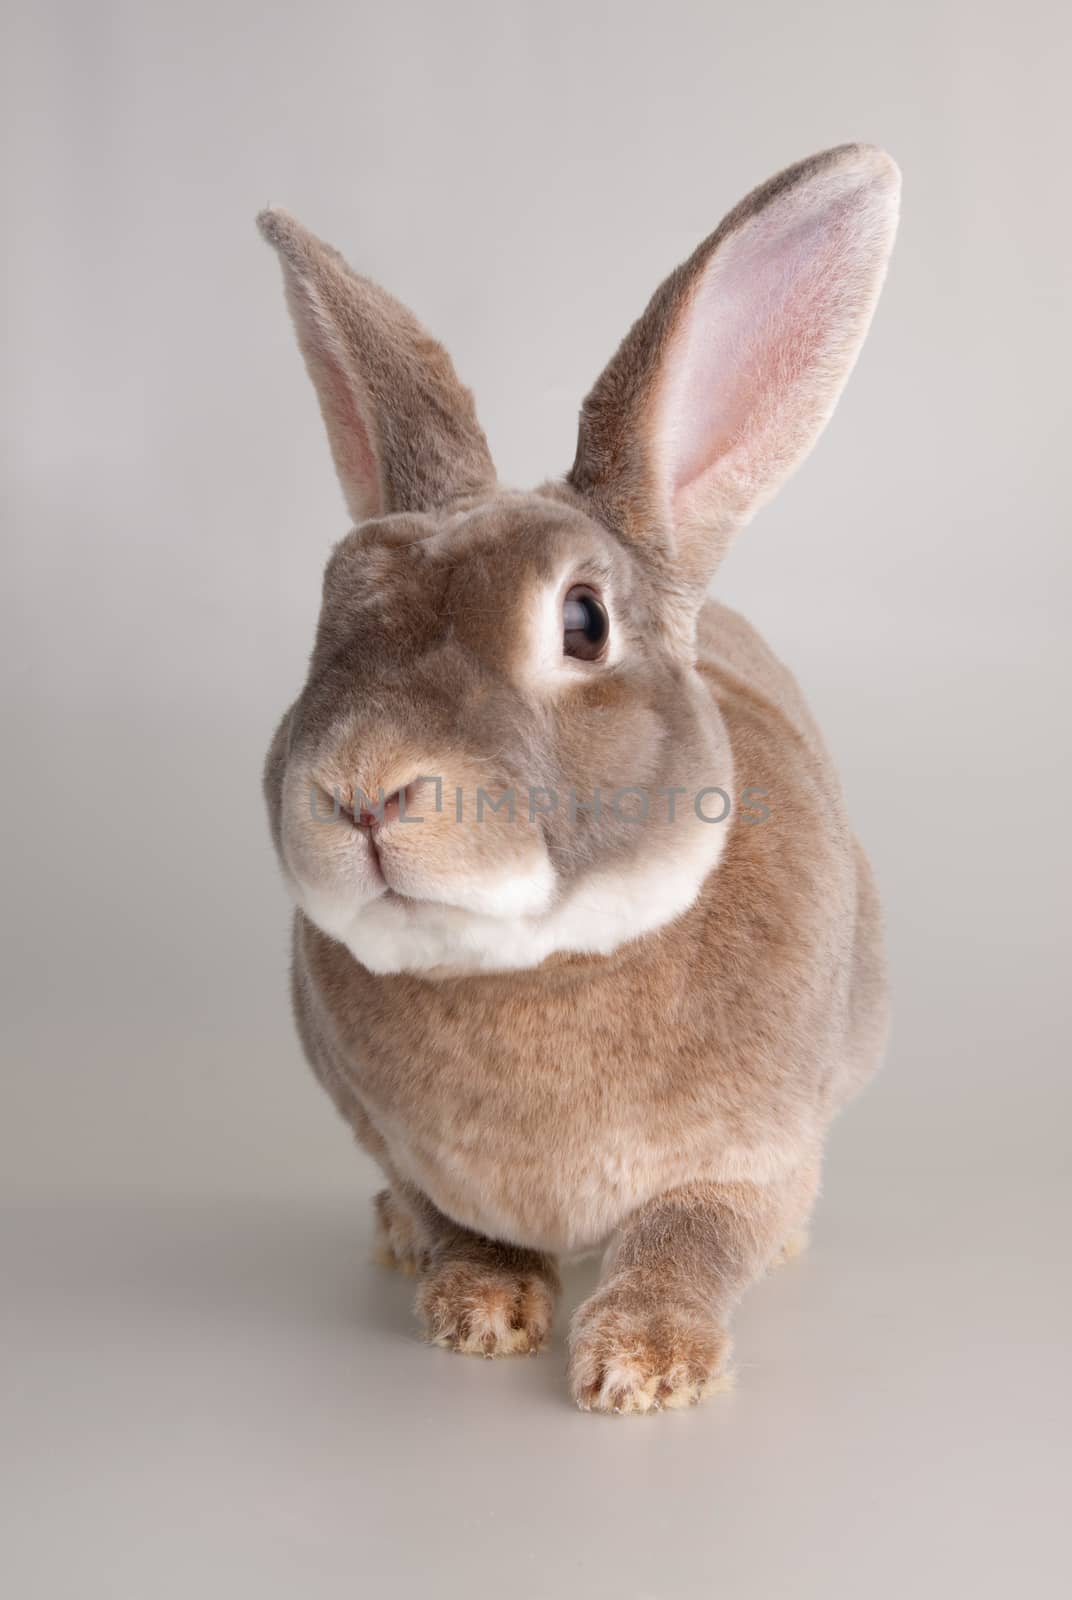 Portrait of a cute domestic rabbit by lanalanglois